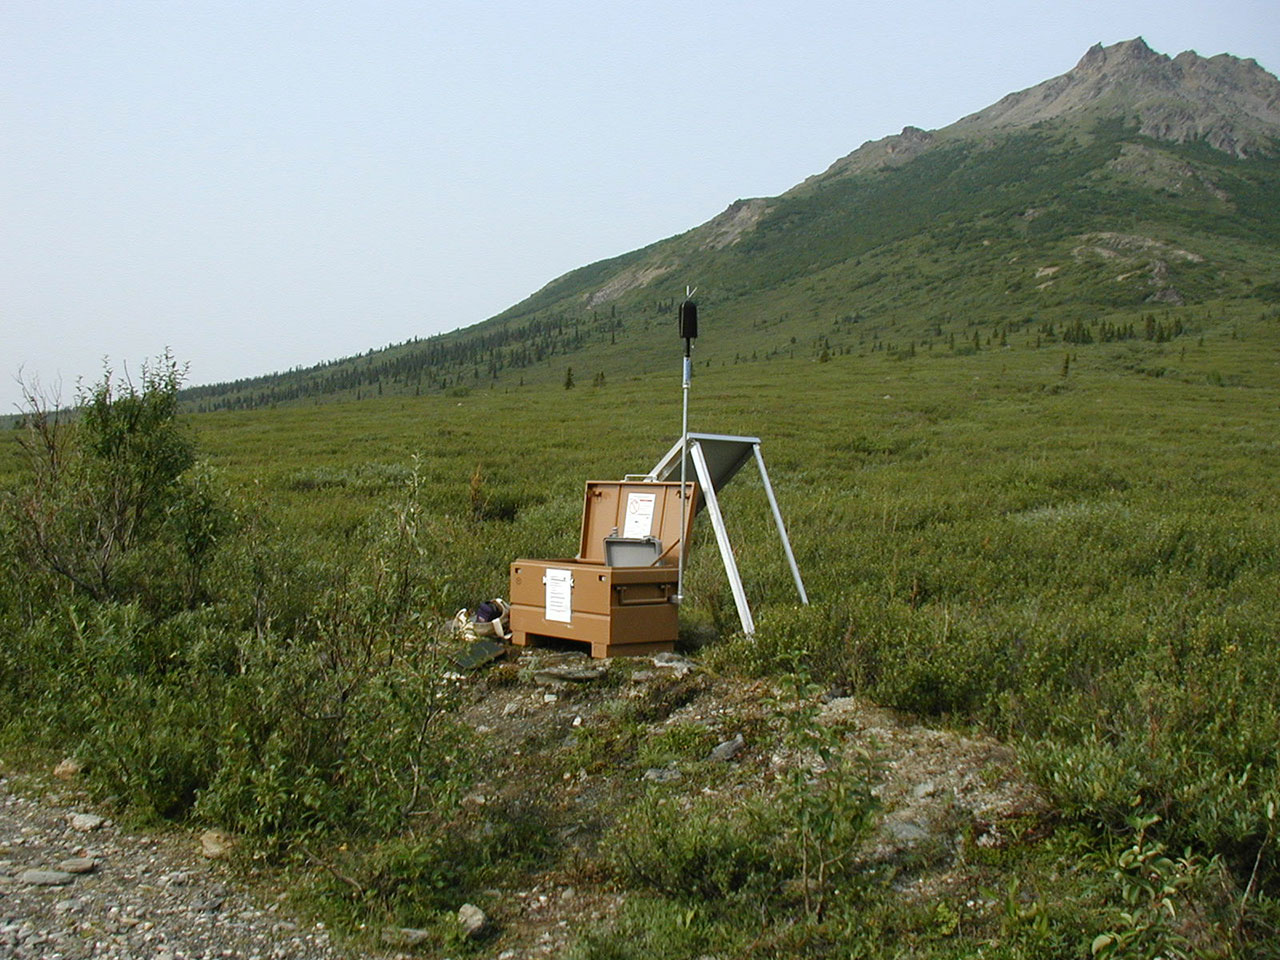 Sound monitoring equipment in Denali